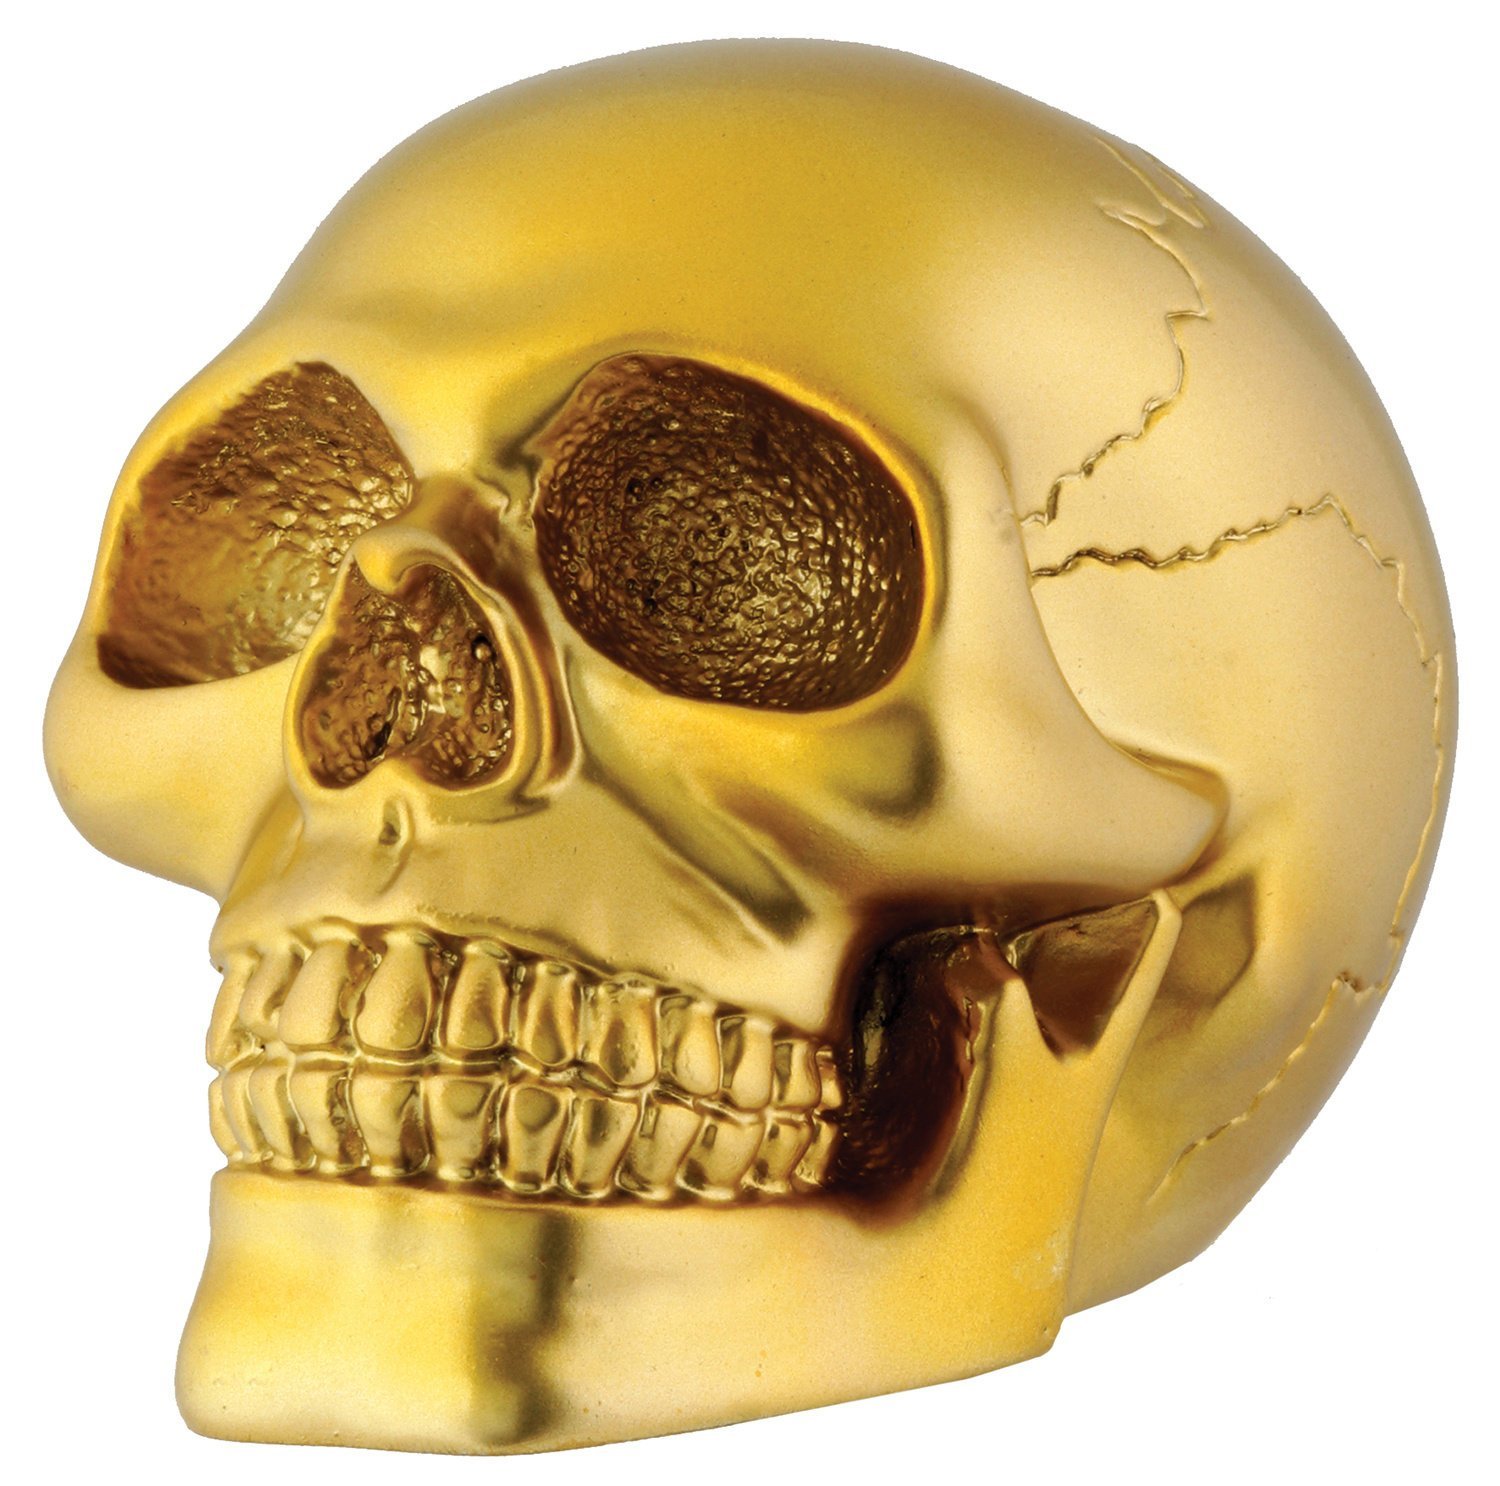 Amazon.com: Gold Skull Head Collectible Skeleton Decoration Figurine ...